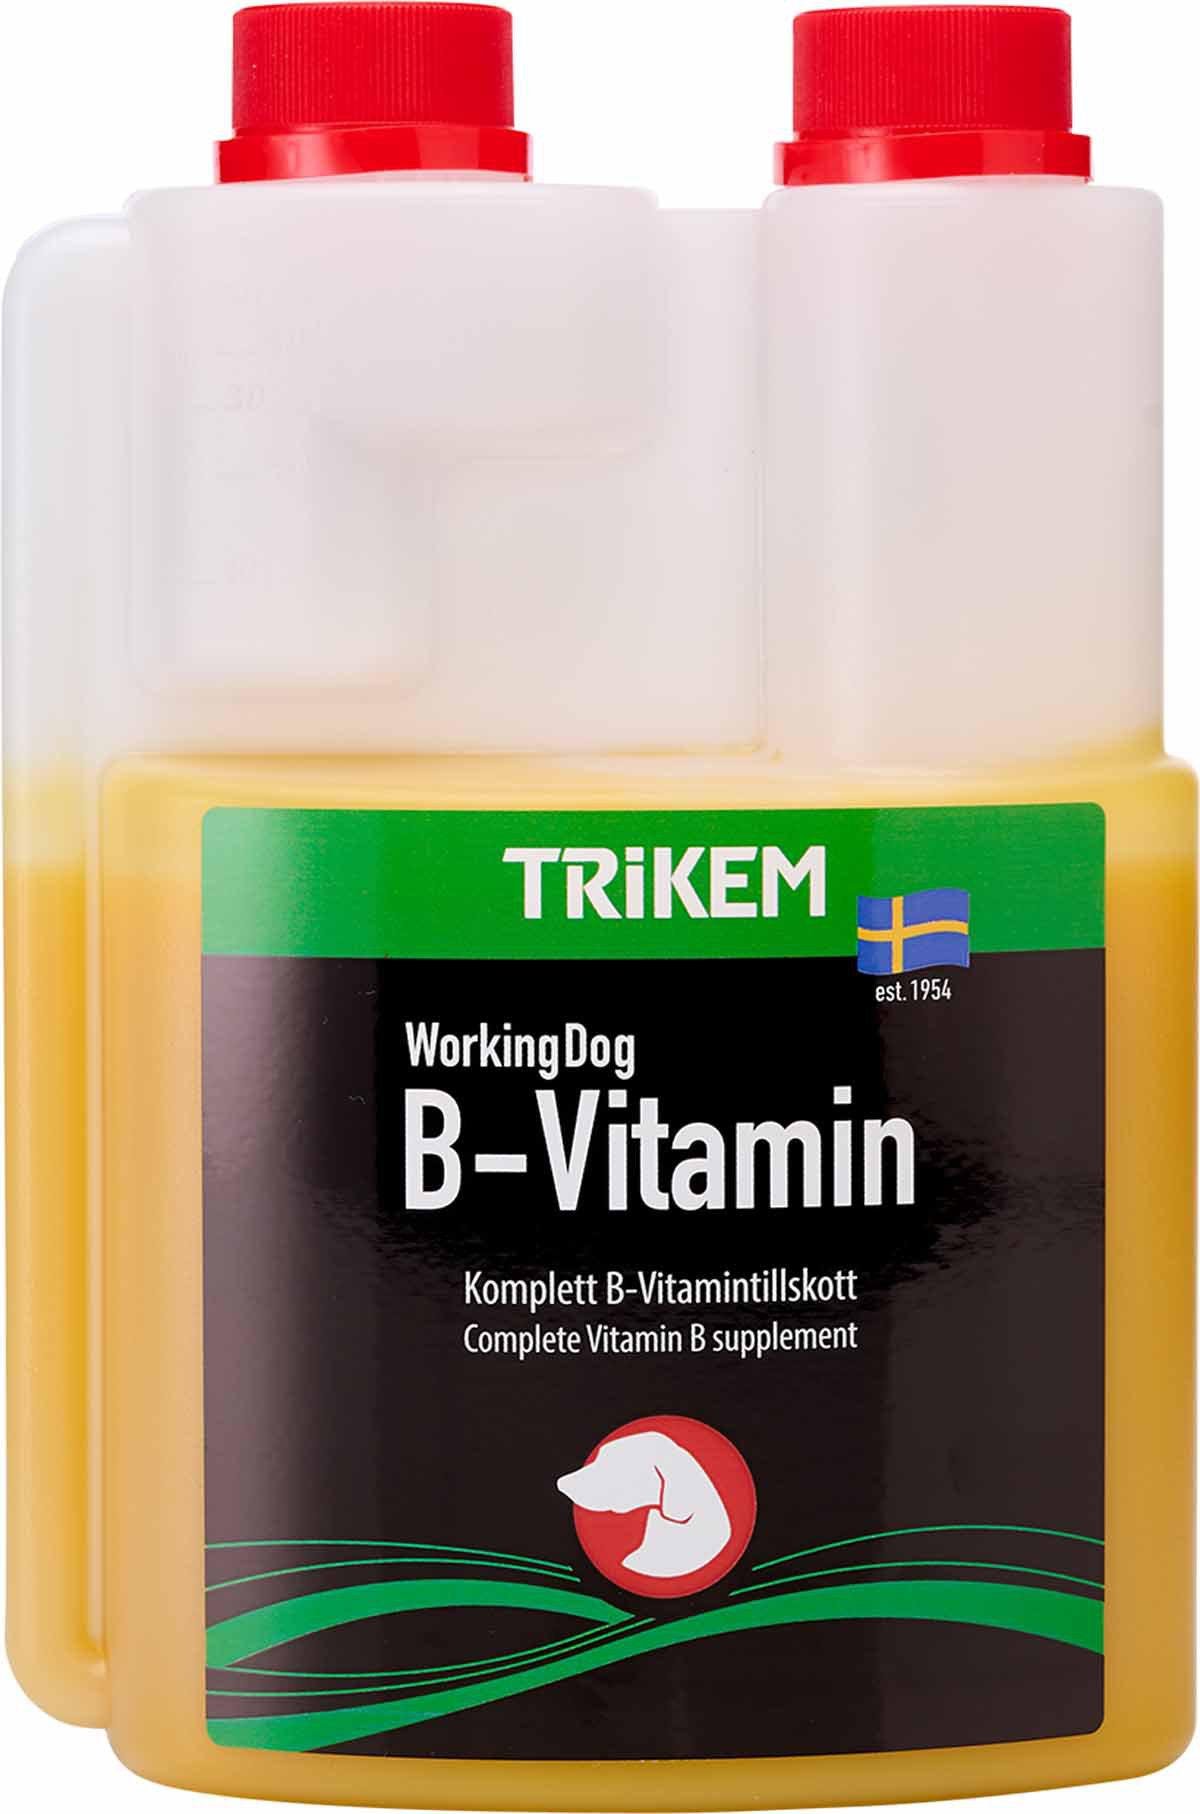 TRIKEM - B-Vitamin 500Ml - (721.2022) - Kjæledyr og utstyr